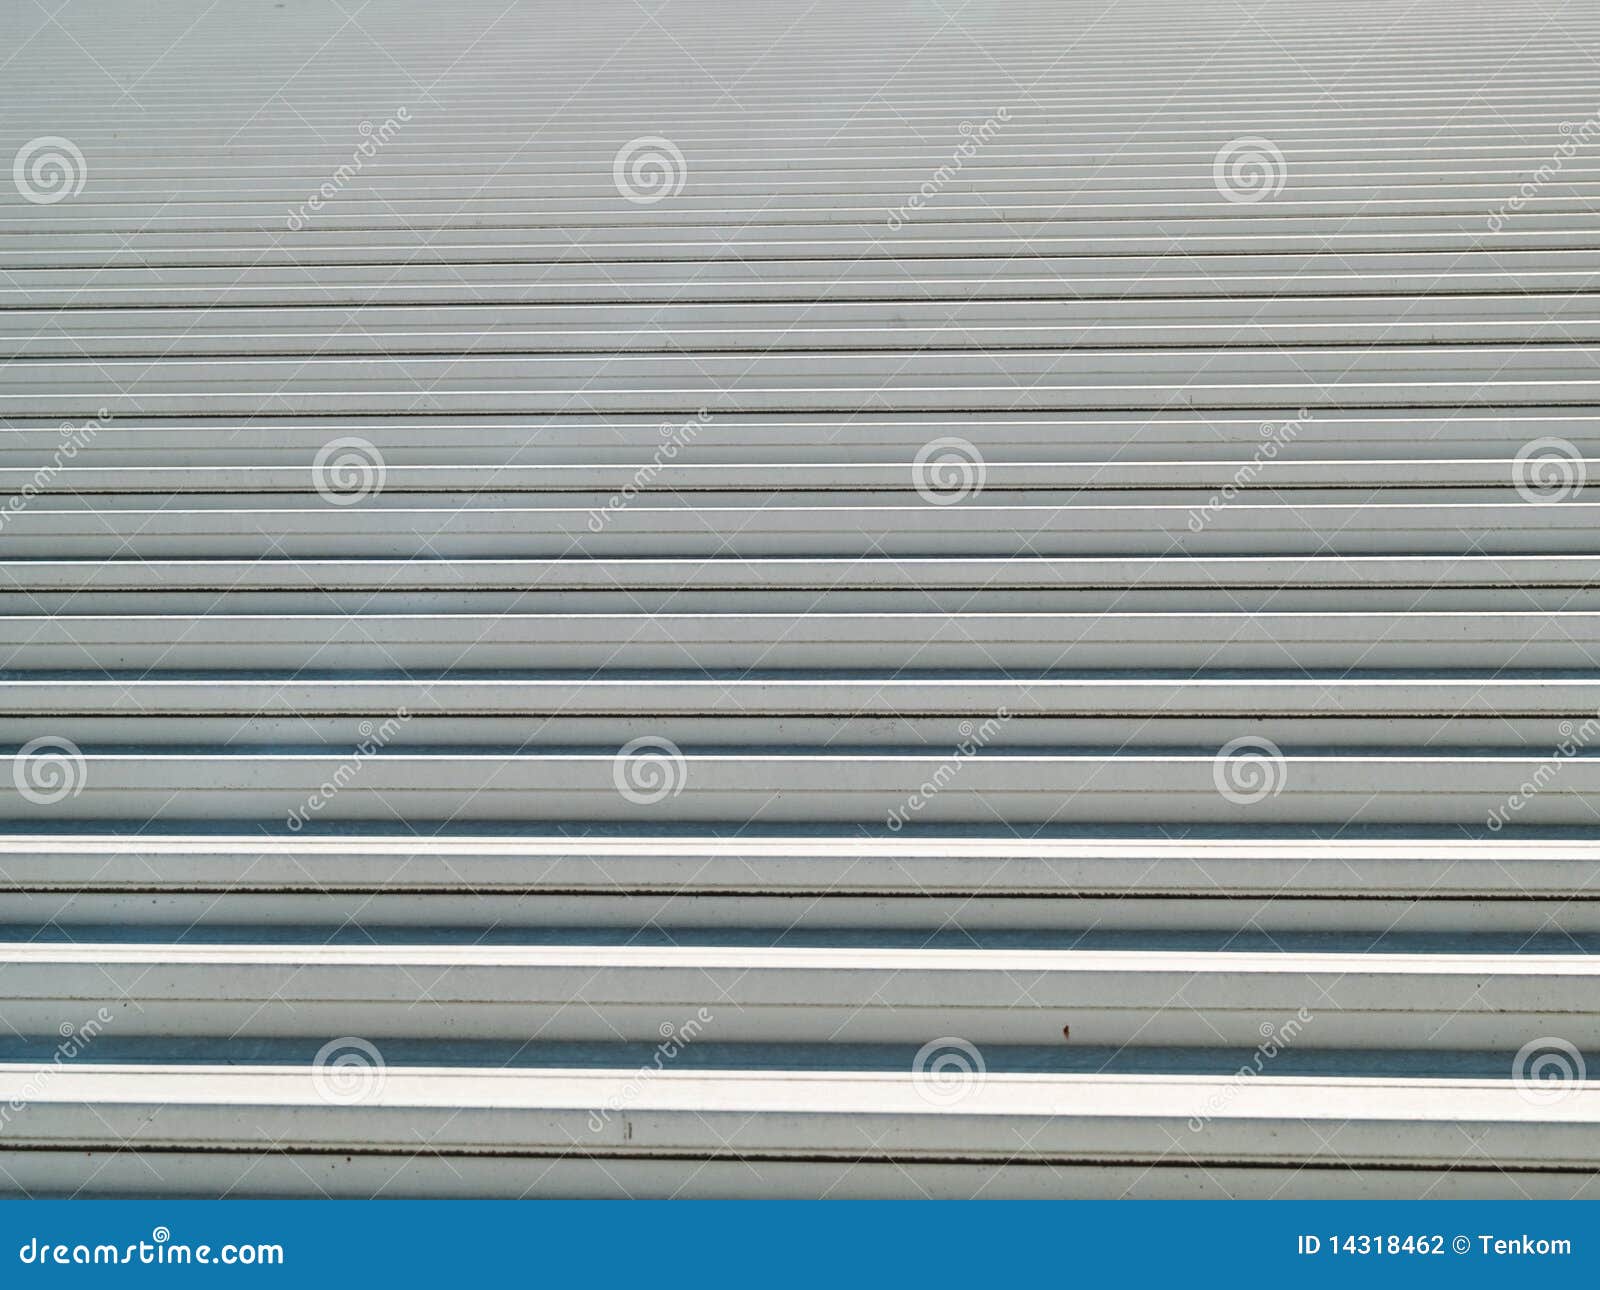 Metal sheet roof stock photo. Image of equipment, metal - 14318462